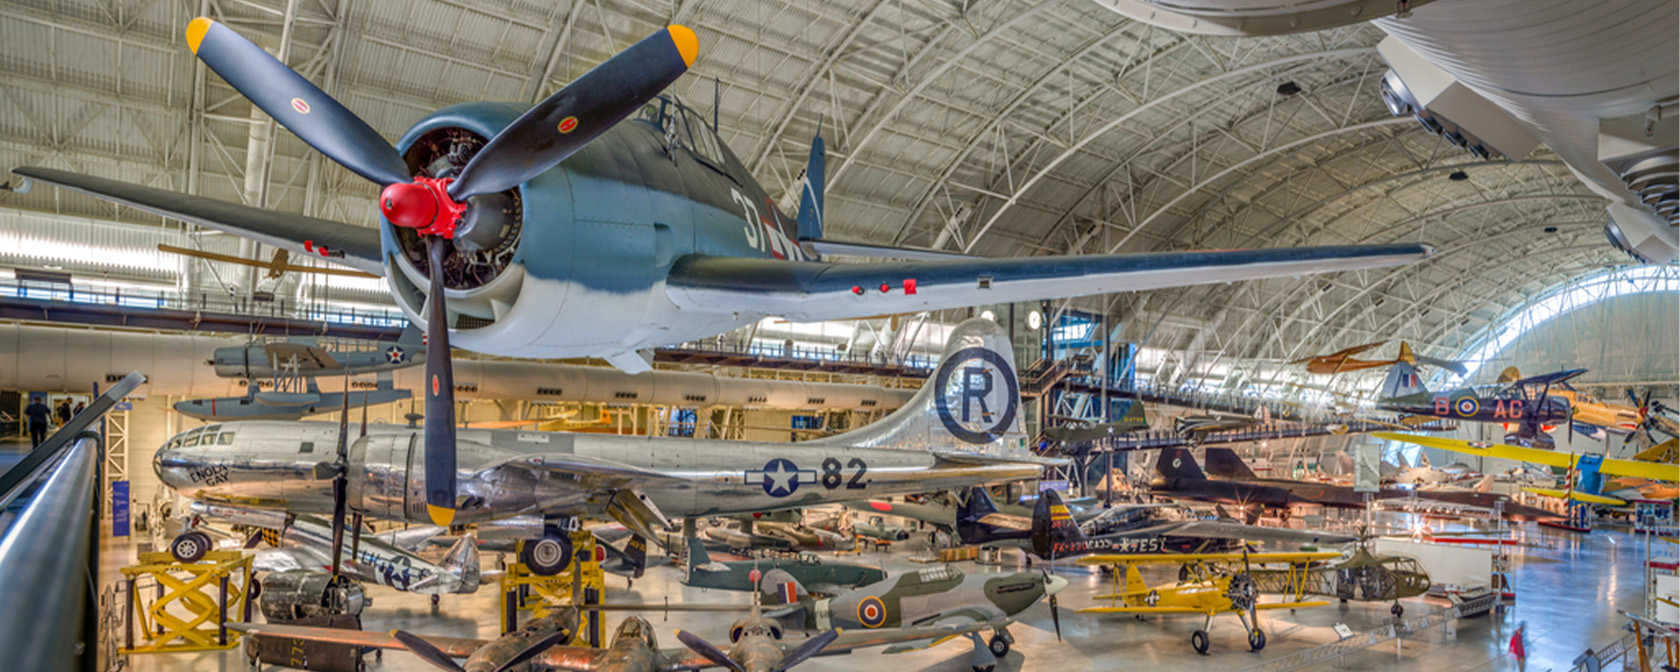 Virtual Aircraft Museum